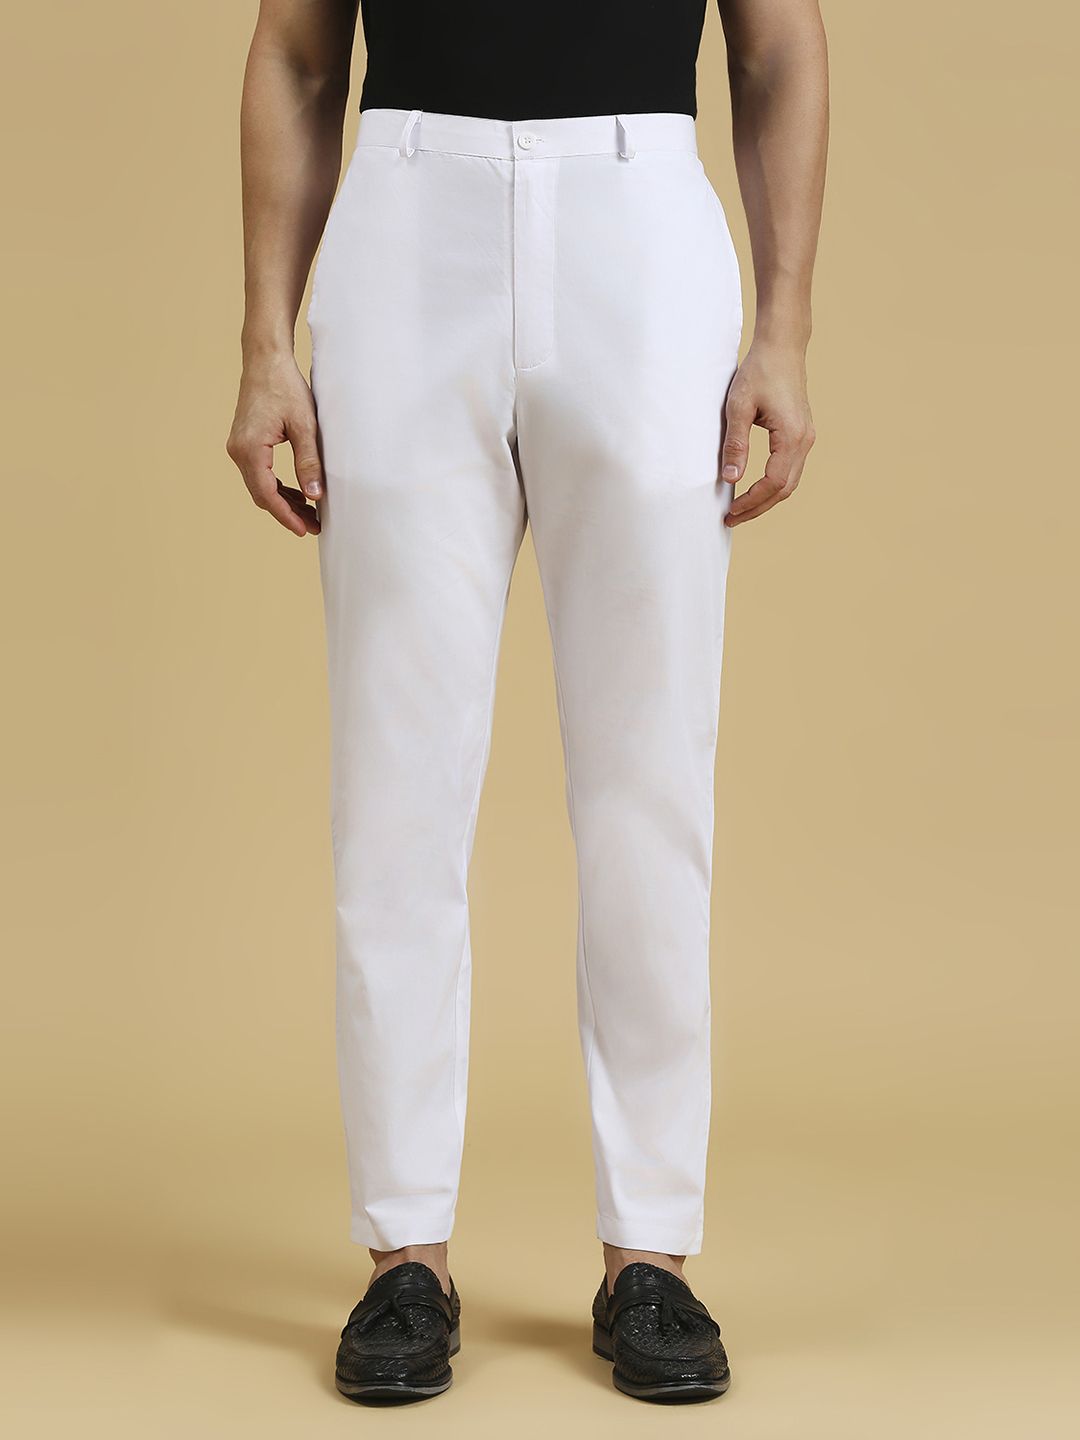 Buy PATWA & CO.® Men's Aligari Pant Style Pyjama White at Amazon.in